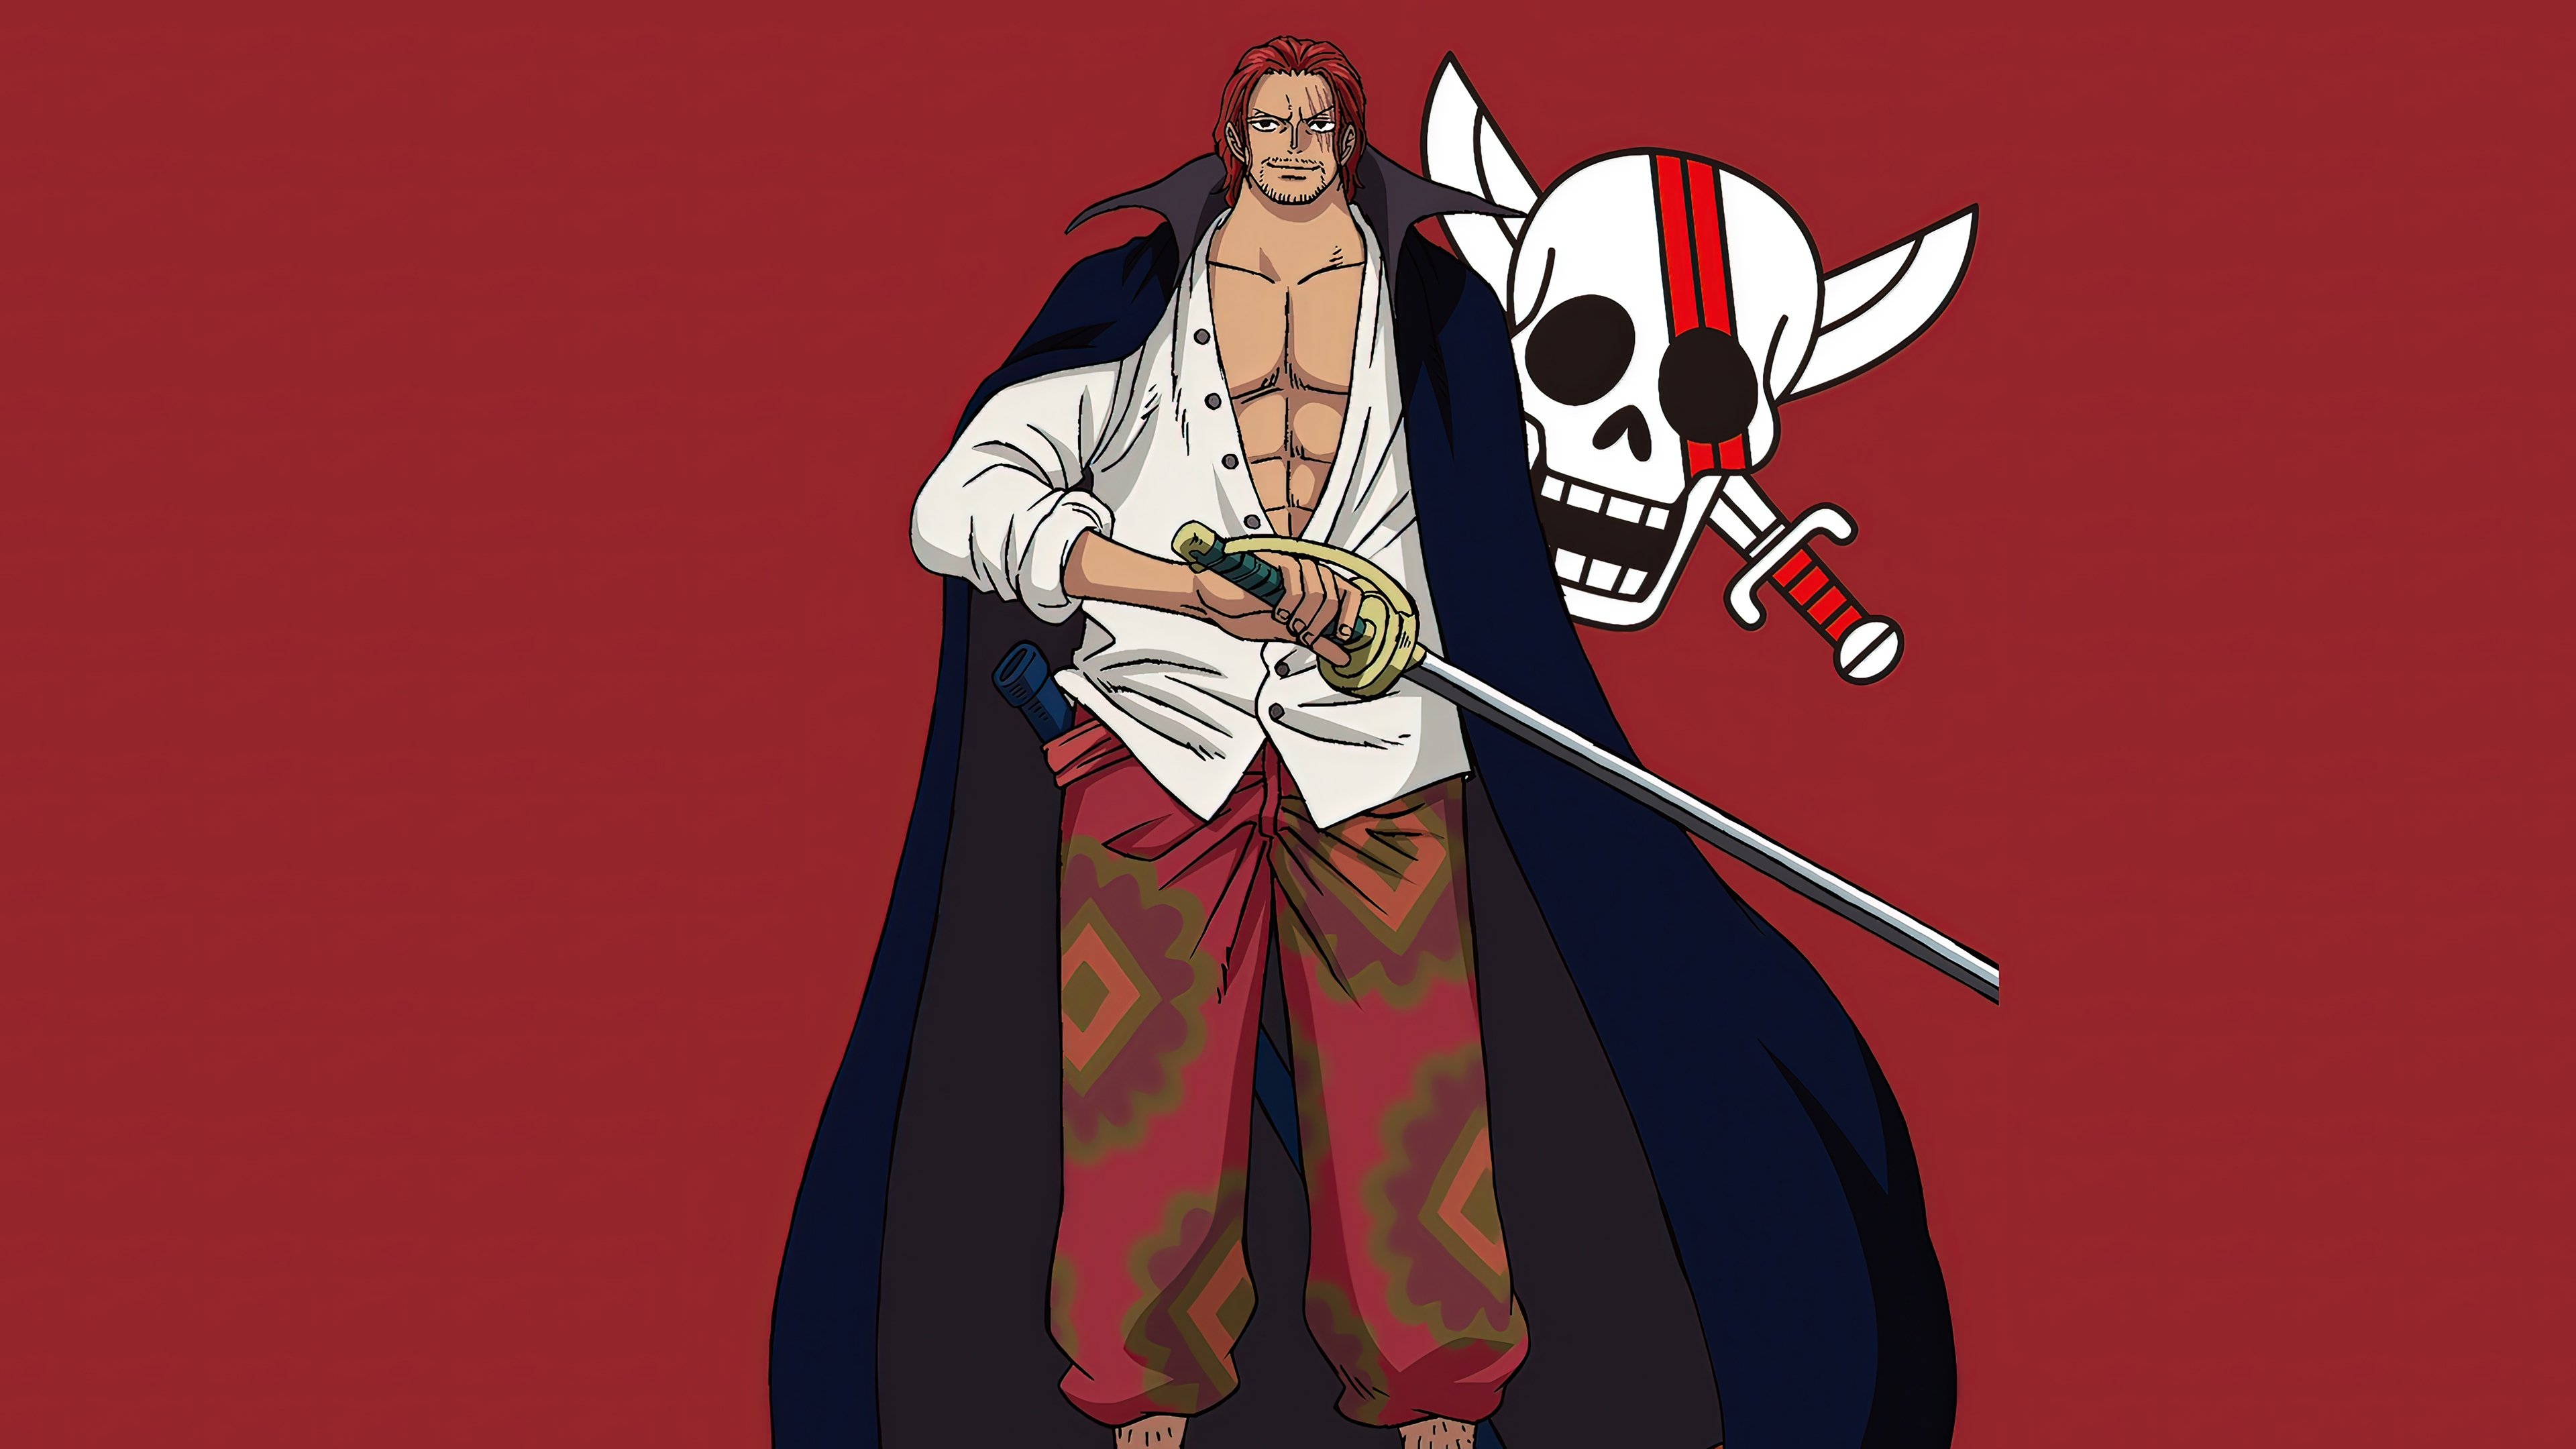 Fondos de pantalla Shanks de One Piece